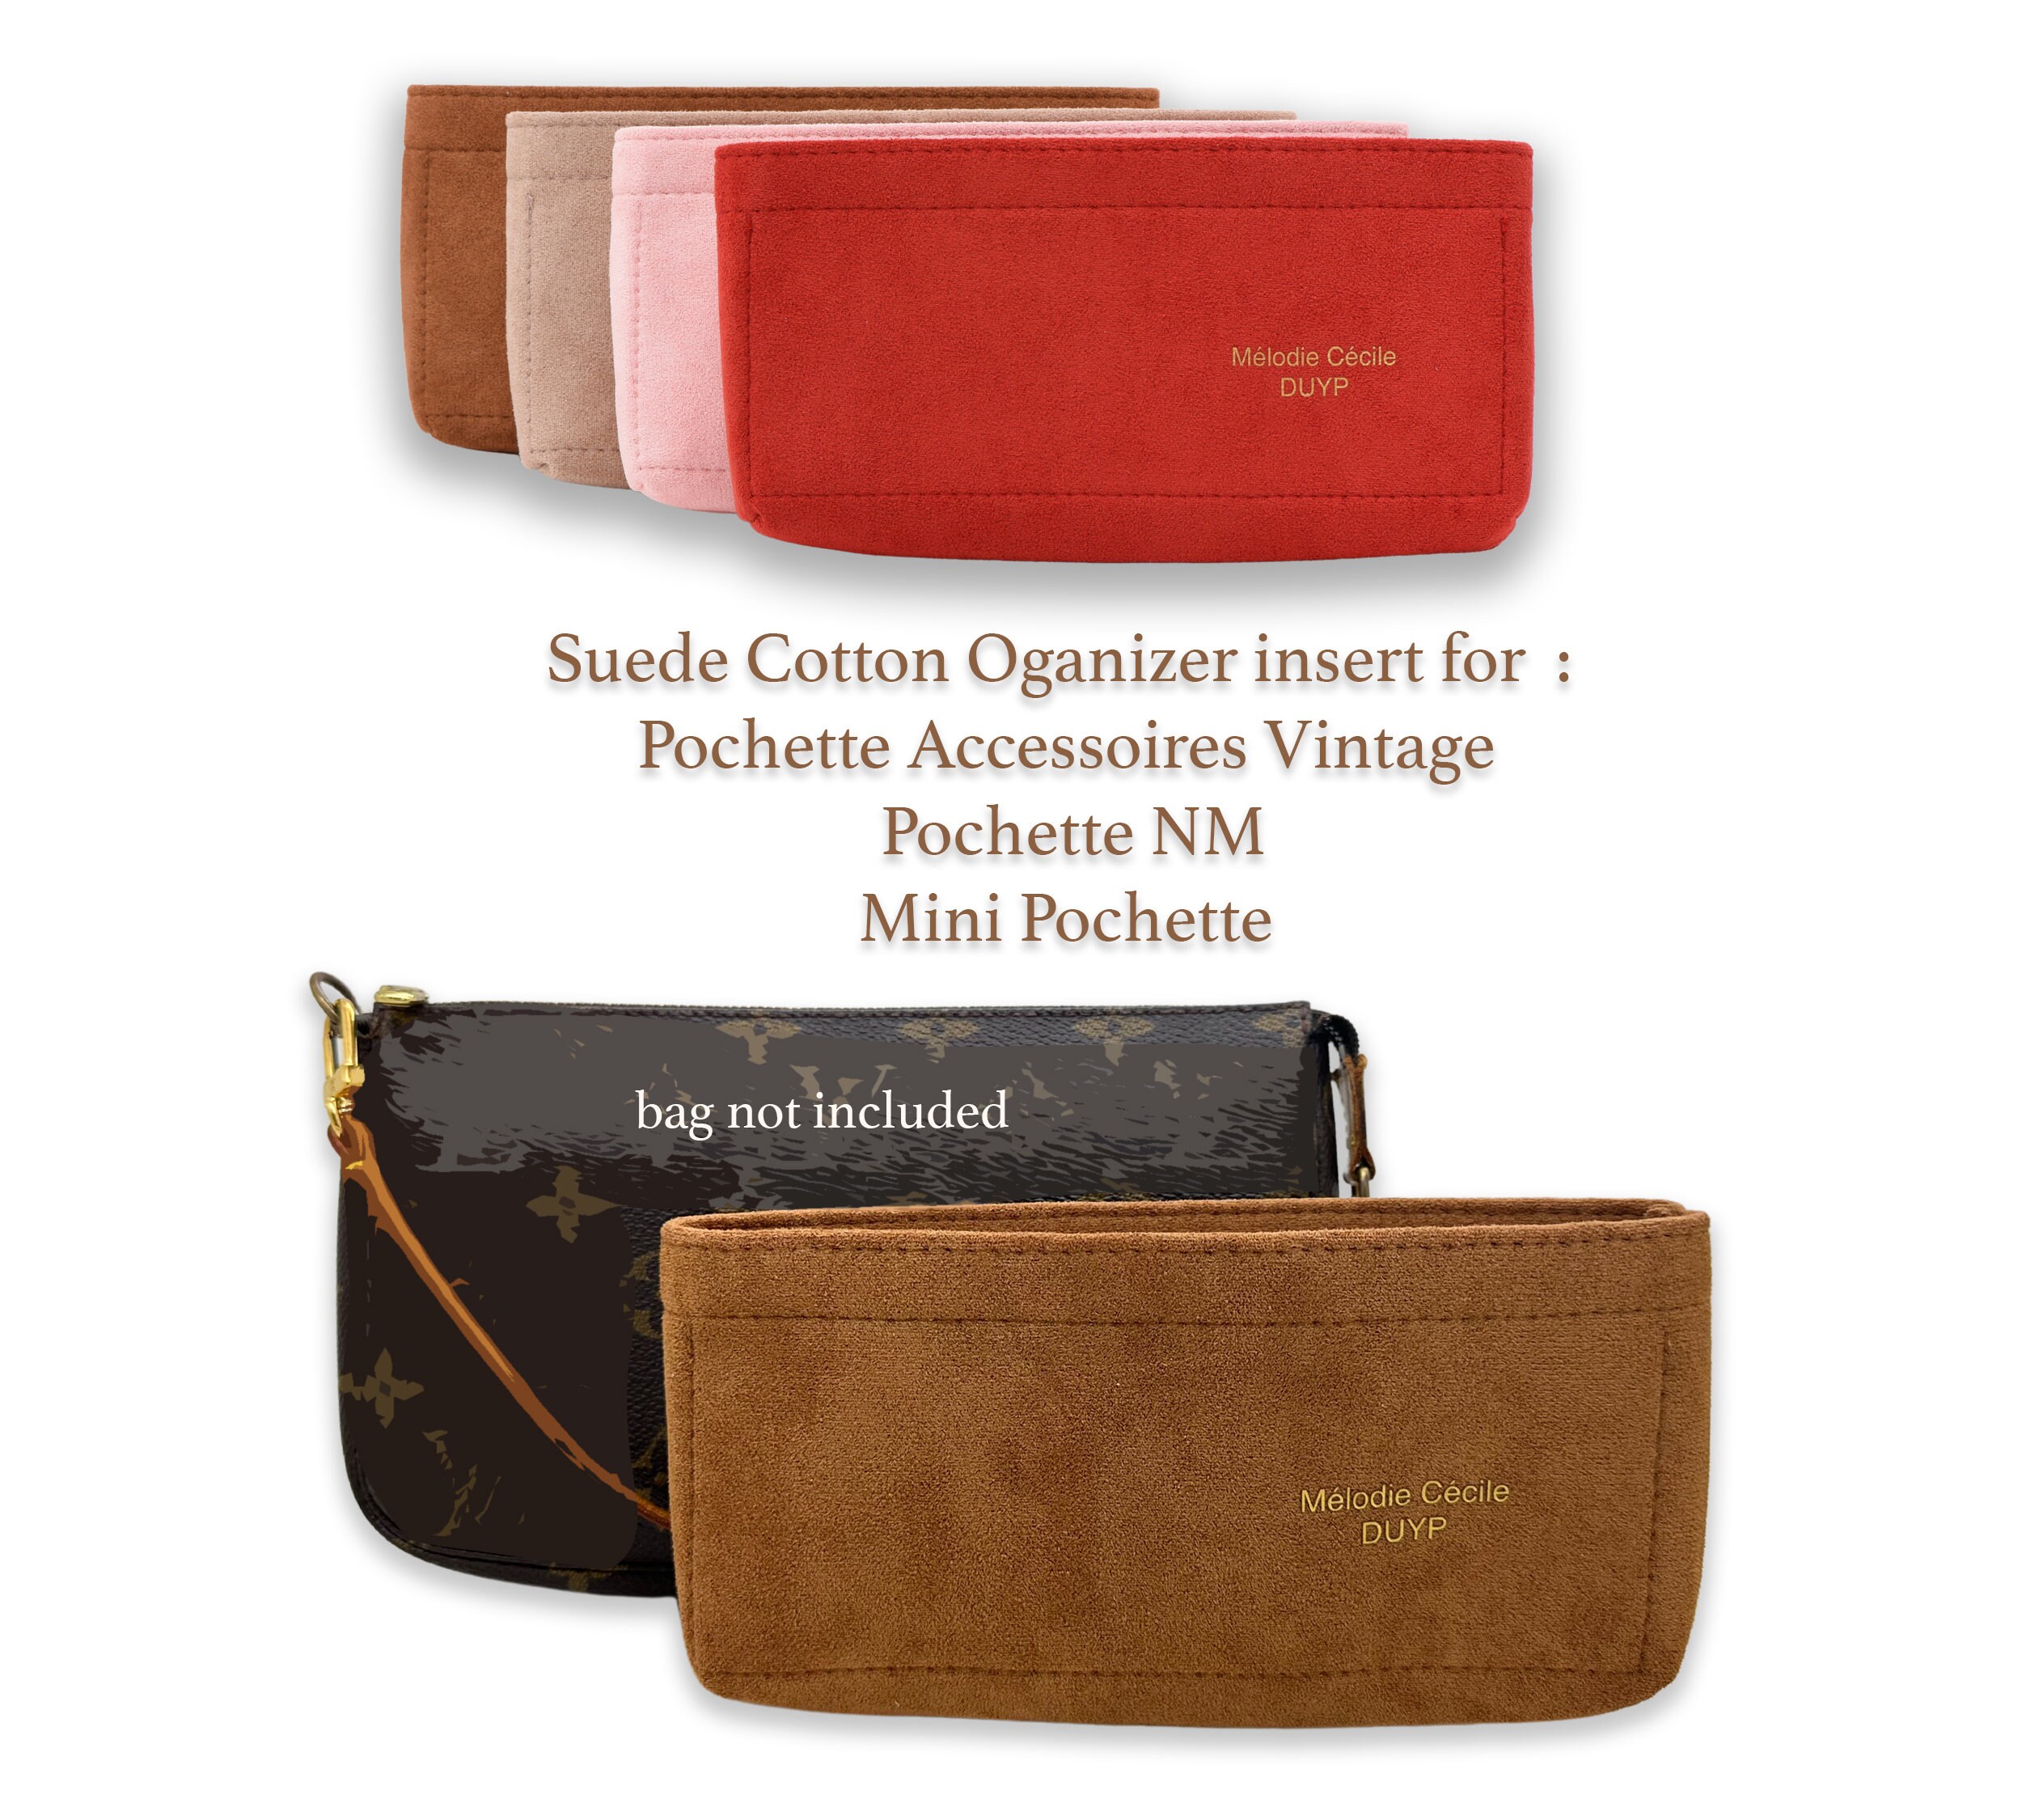 Suede Cotton Organizer for Pochette Accessoires Vintage or NM 